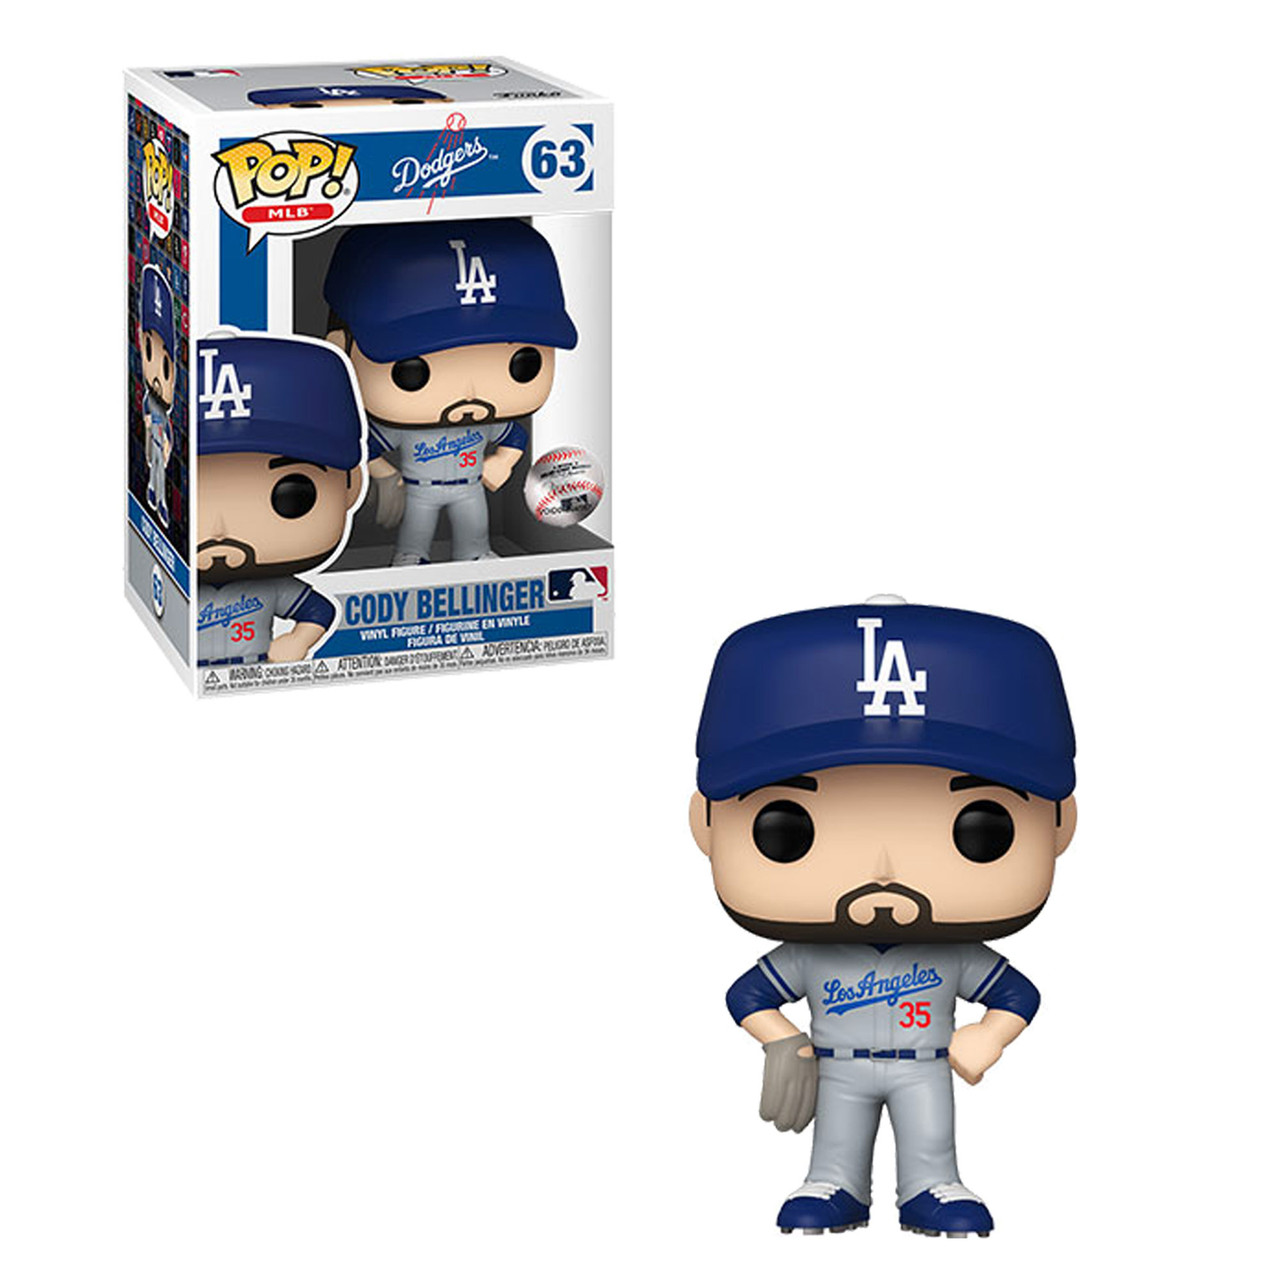 Cody Bellinger (Los Angeles Dodgers) Gray Uniform MLB Funko Pop! Series 4